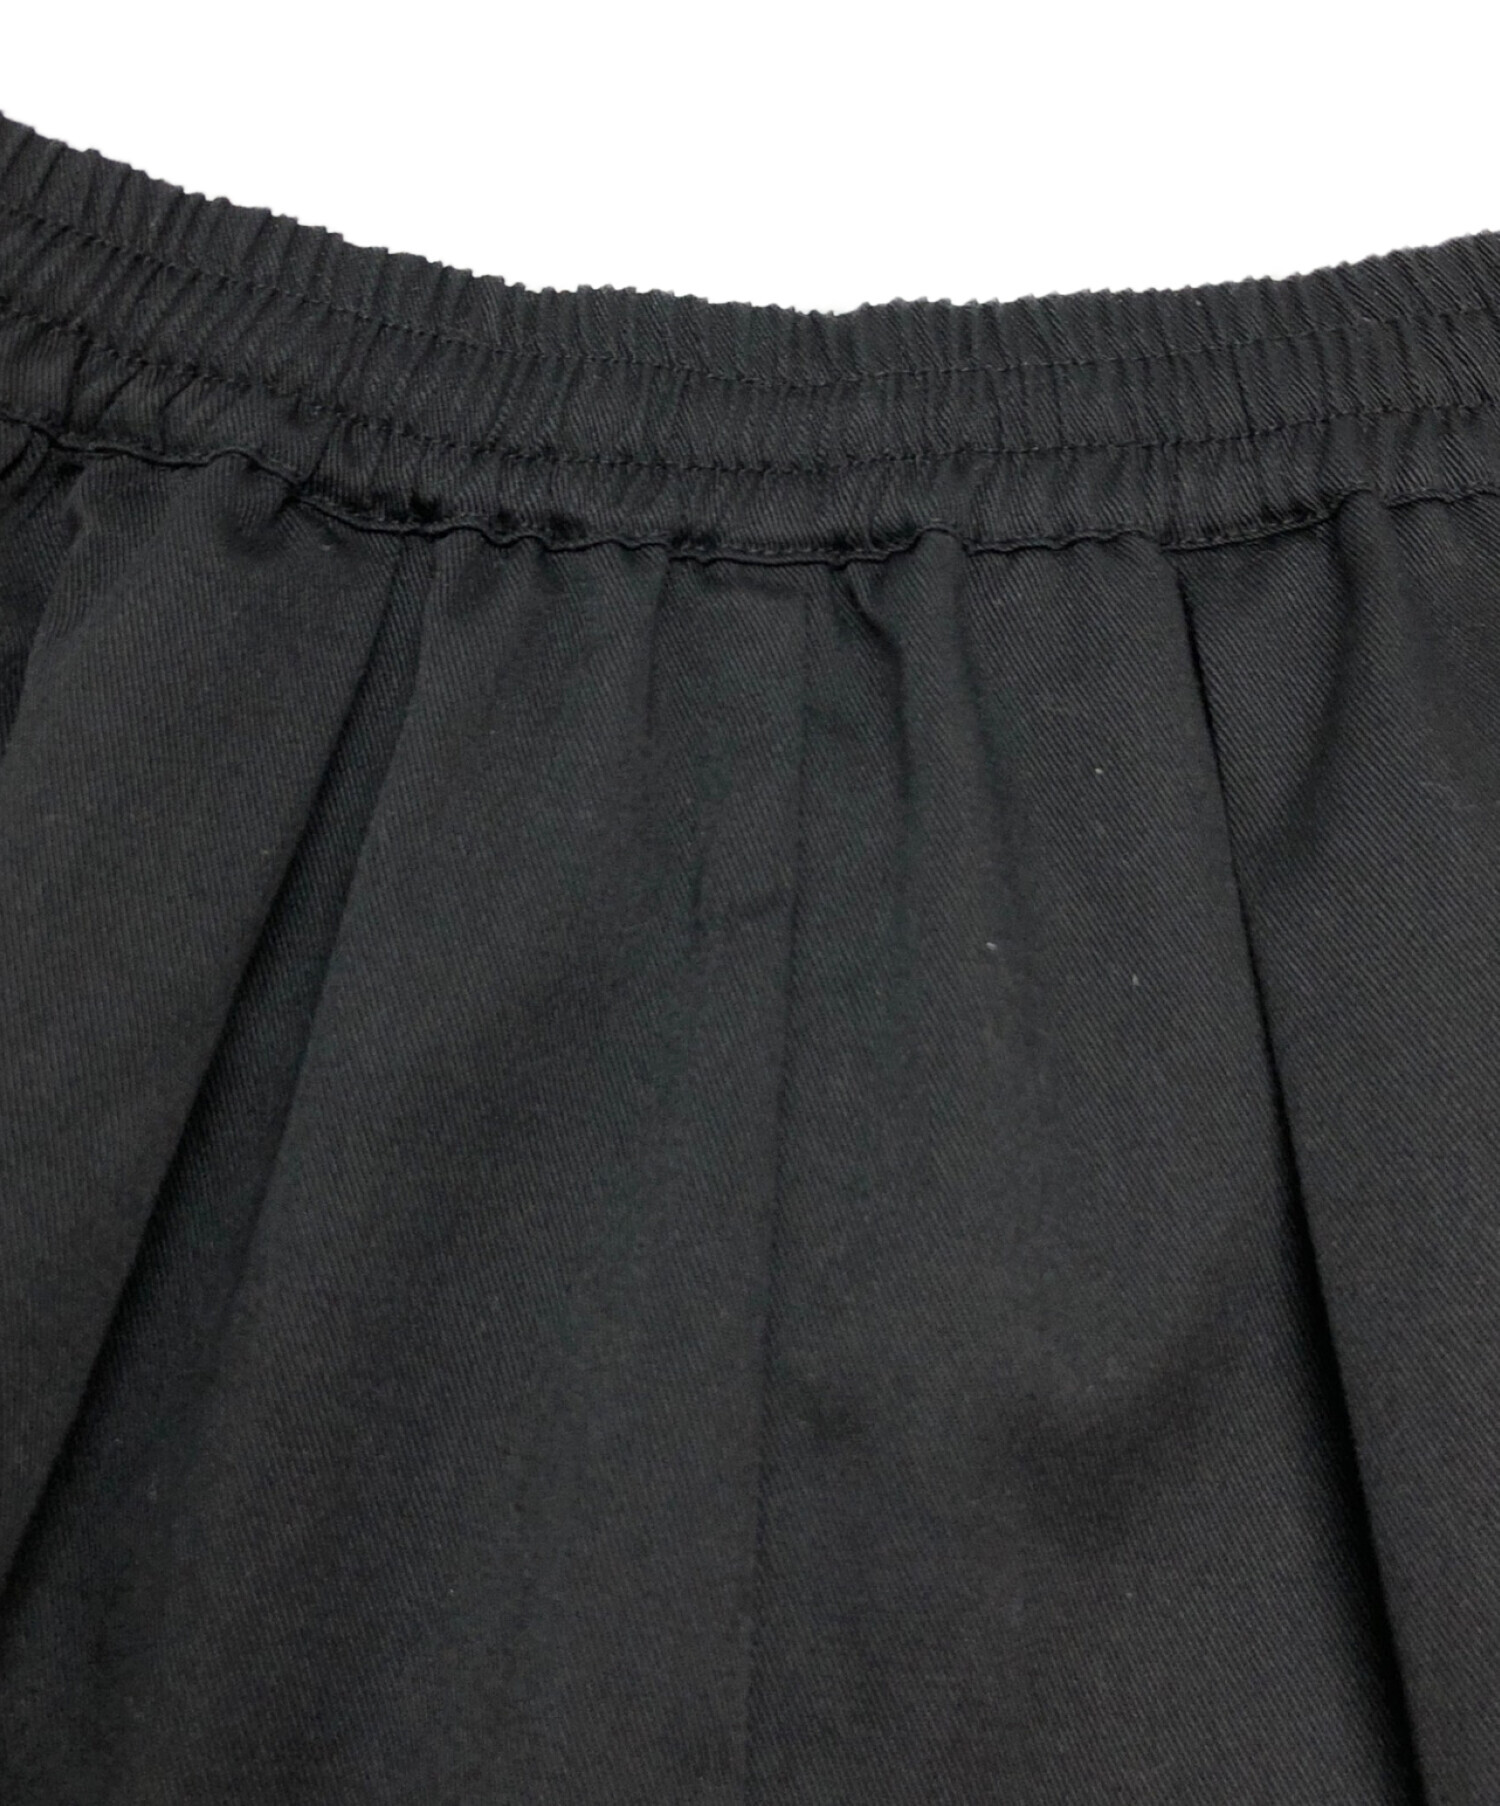 kurashi&trips publishing (クラシアンドトリップス パブリッシング) スッキリ見えが叶うフロントボタンのロングスカート  ブラック サイズ:SIZE M